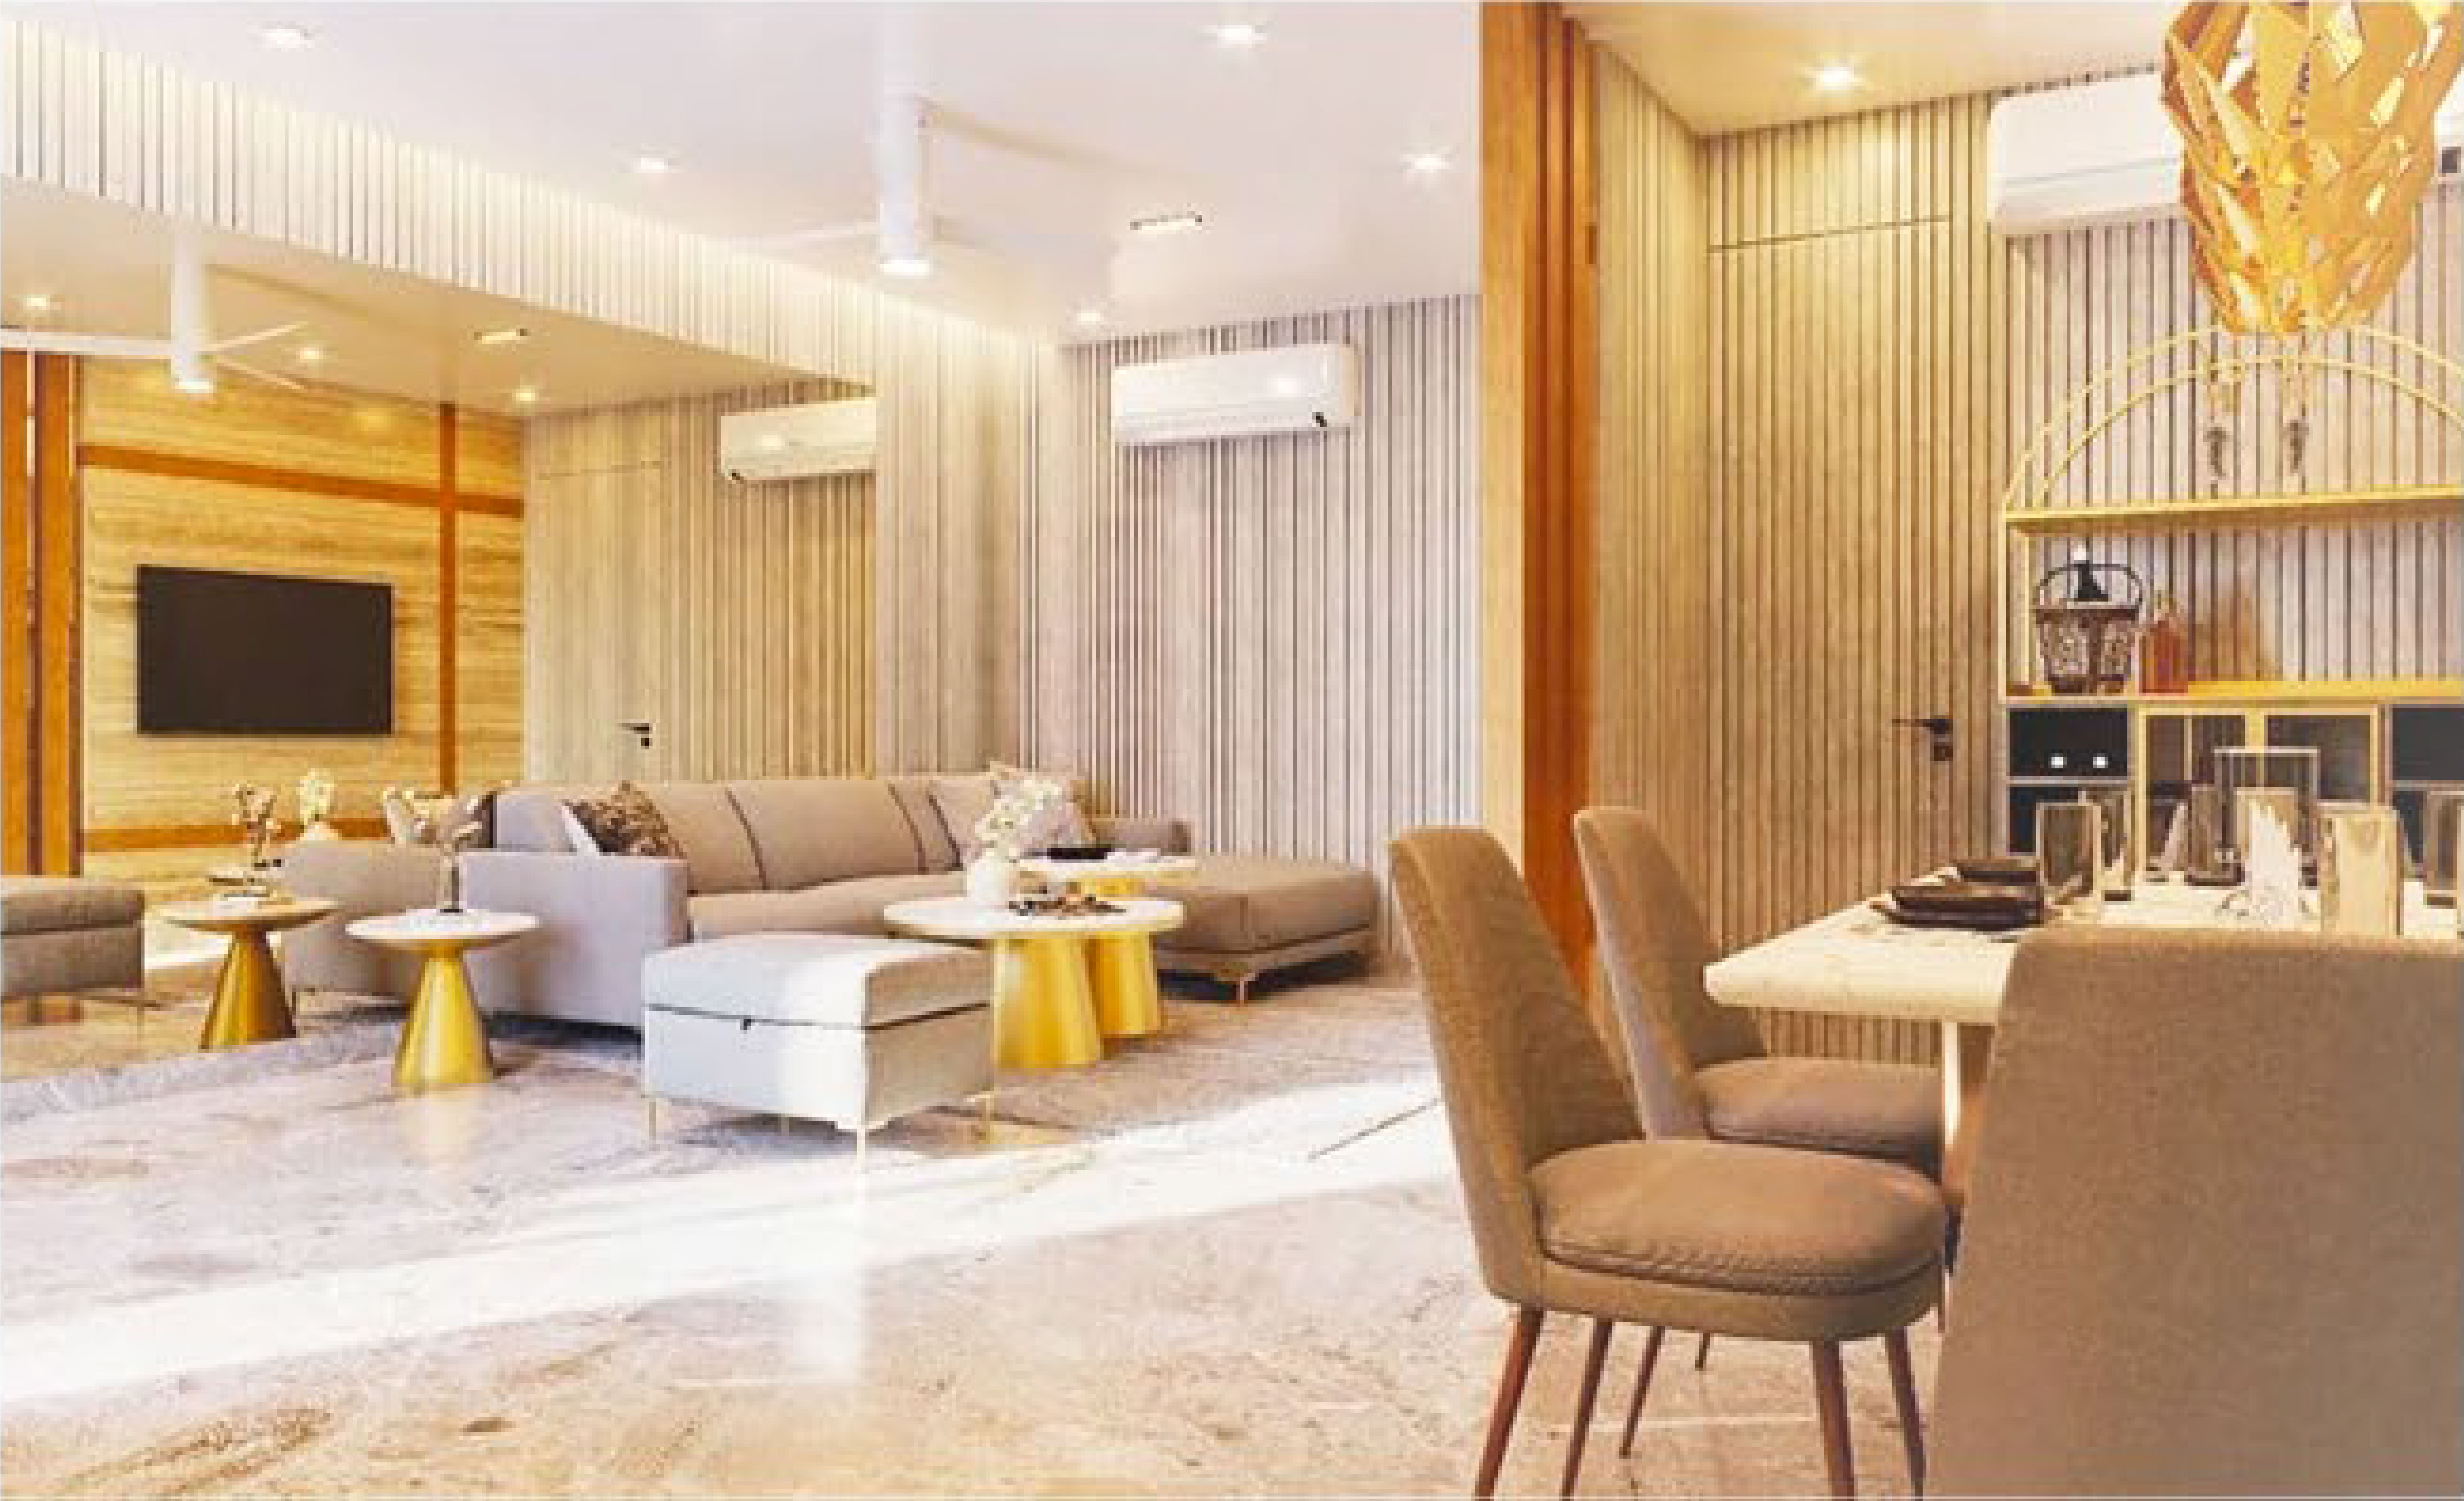 3bhk Luxury apartments in Delhi